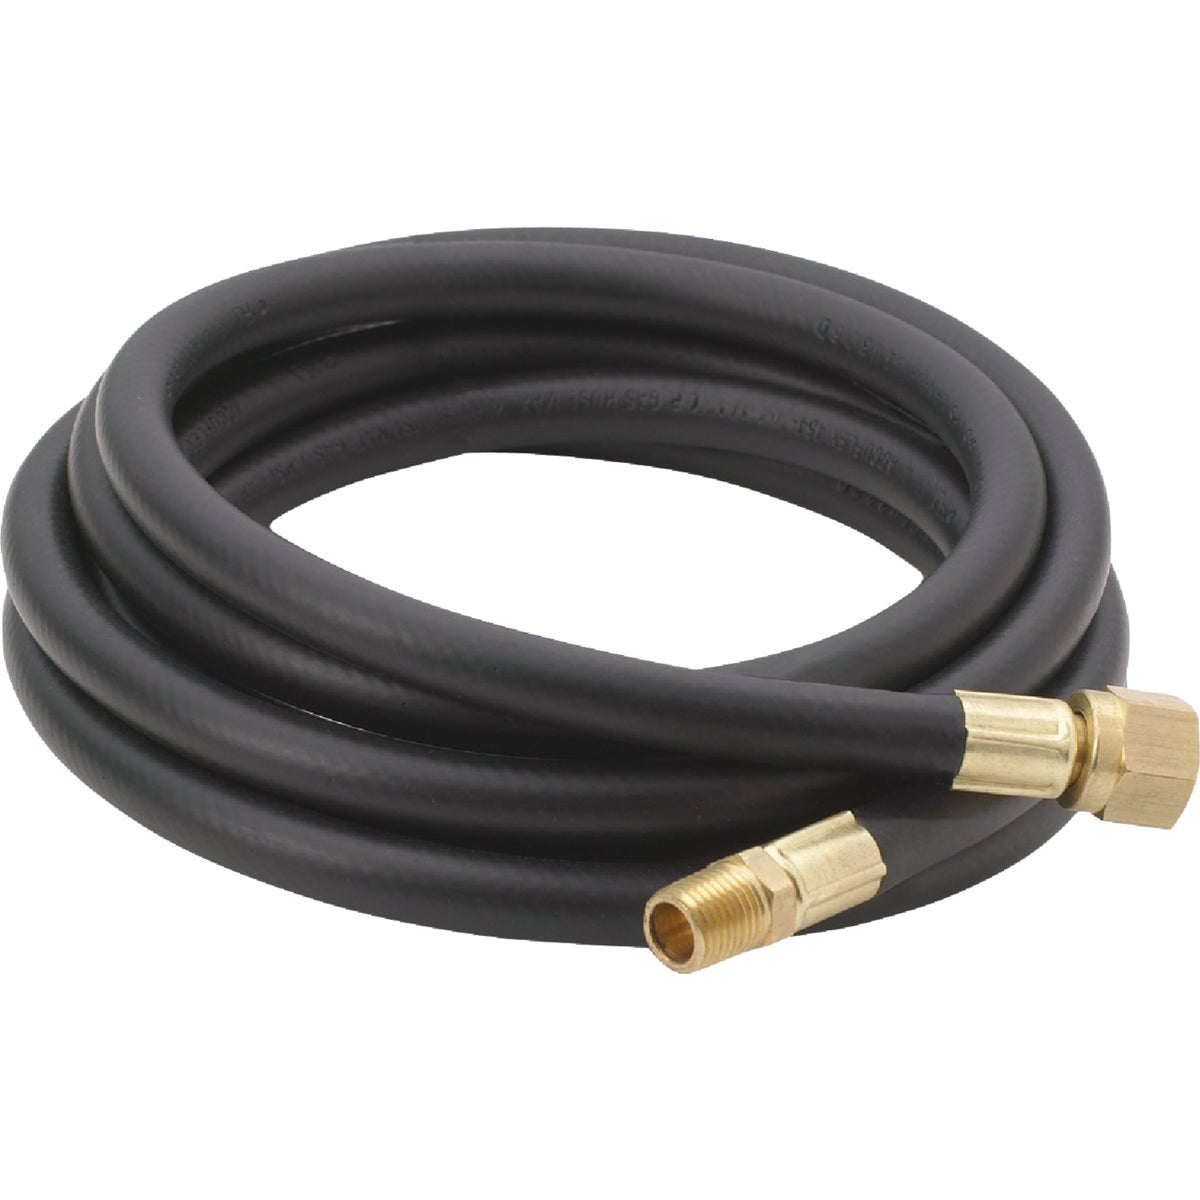 Item 803995, High pressure LPG hose. 1/4 In. MNPT x 3/8 In. flare brass connector.